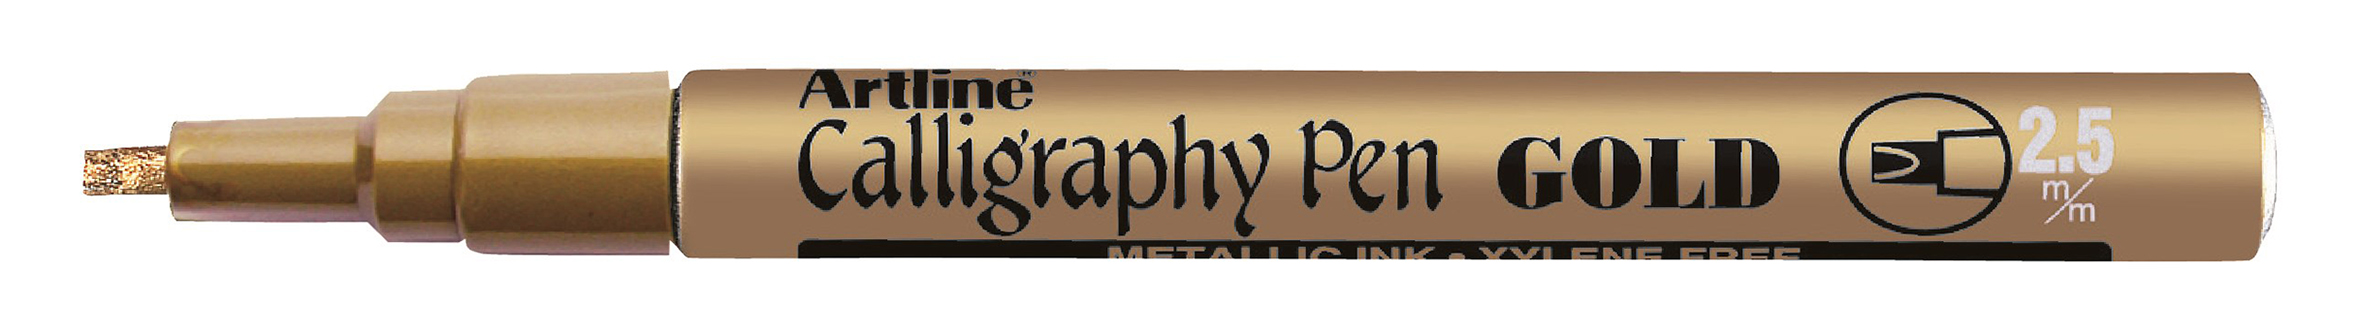 Kalligrafipenna Artline guld 2,5mm 13180011